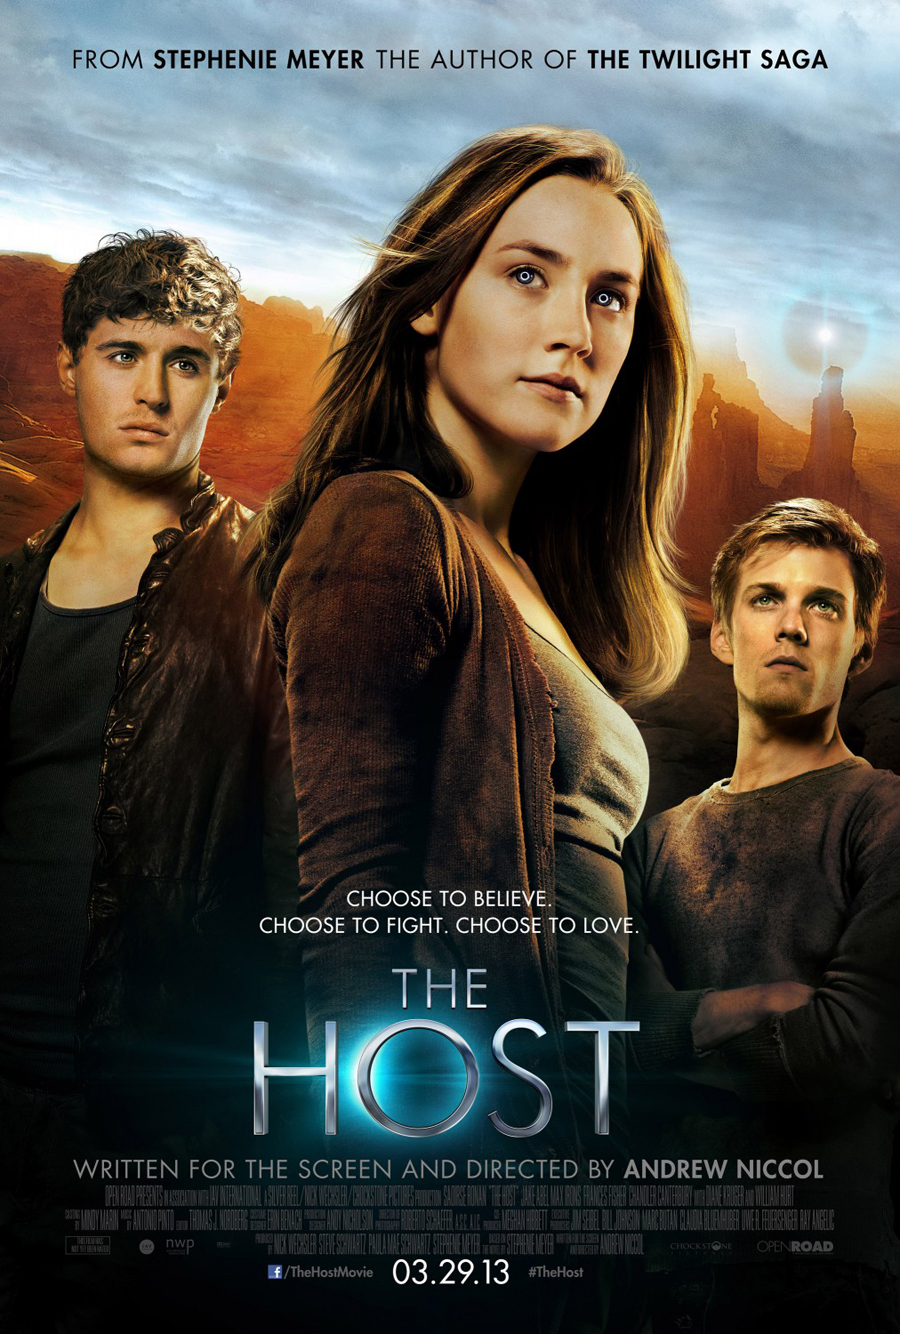 Saoirse Ronan in The Host